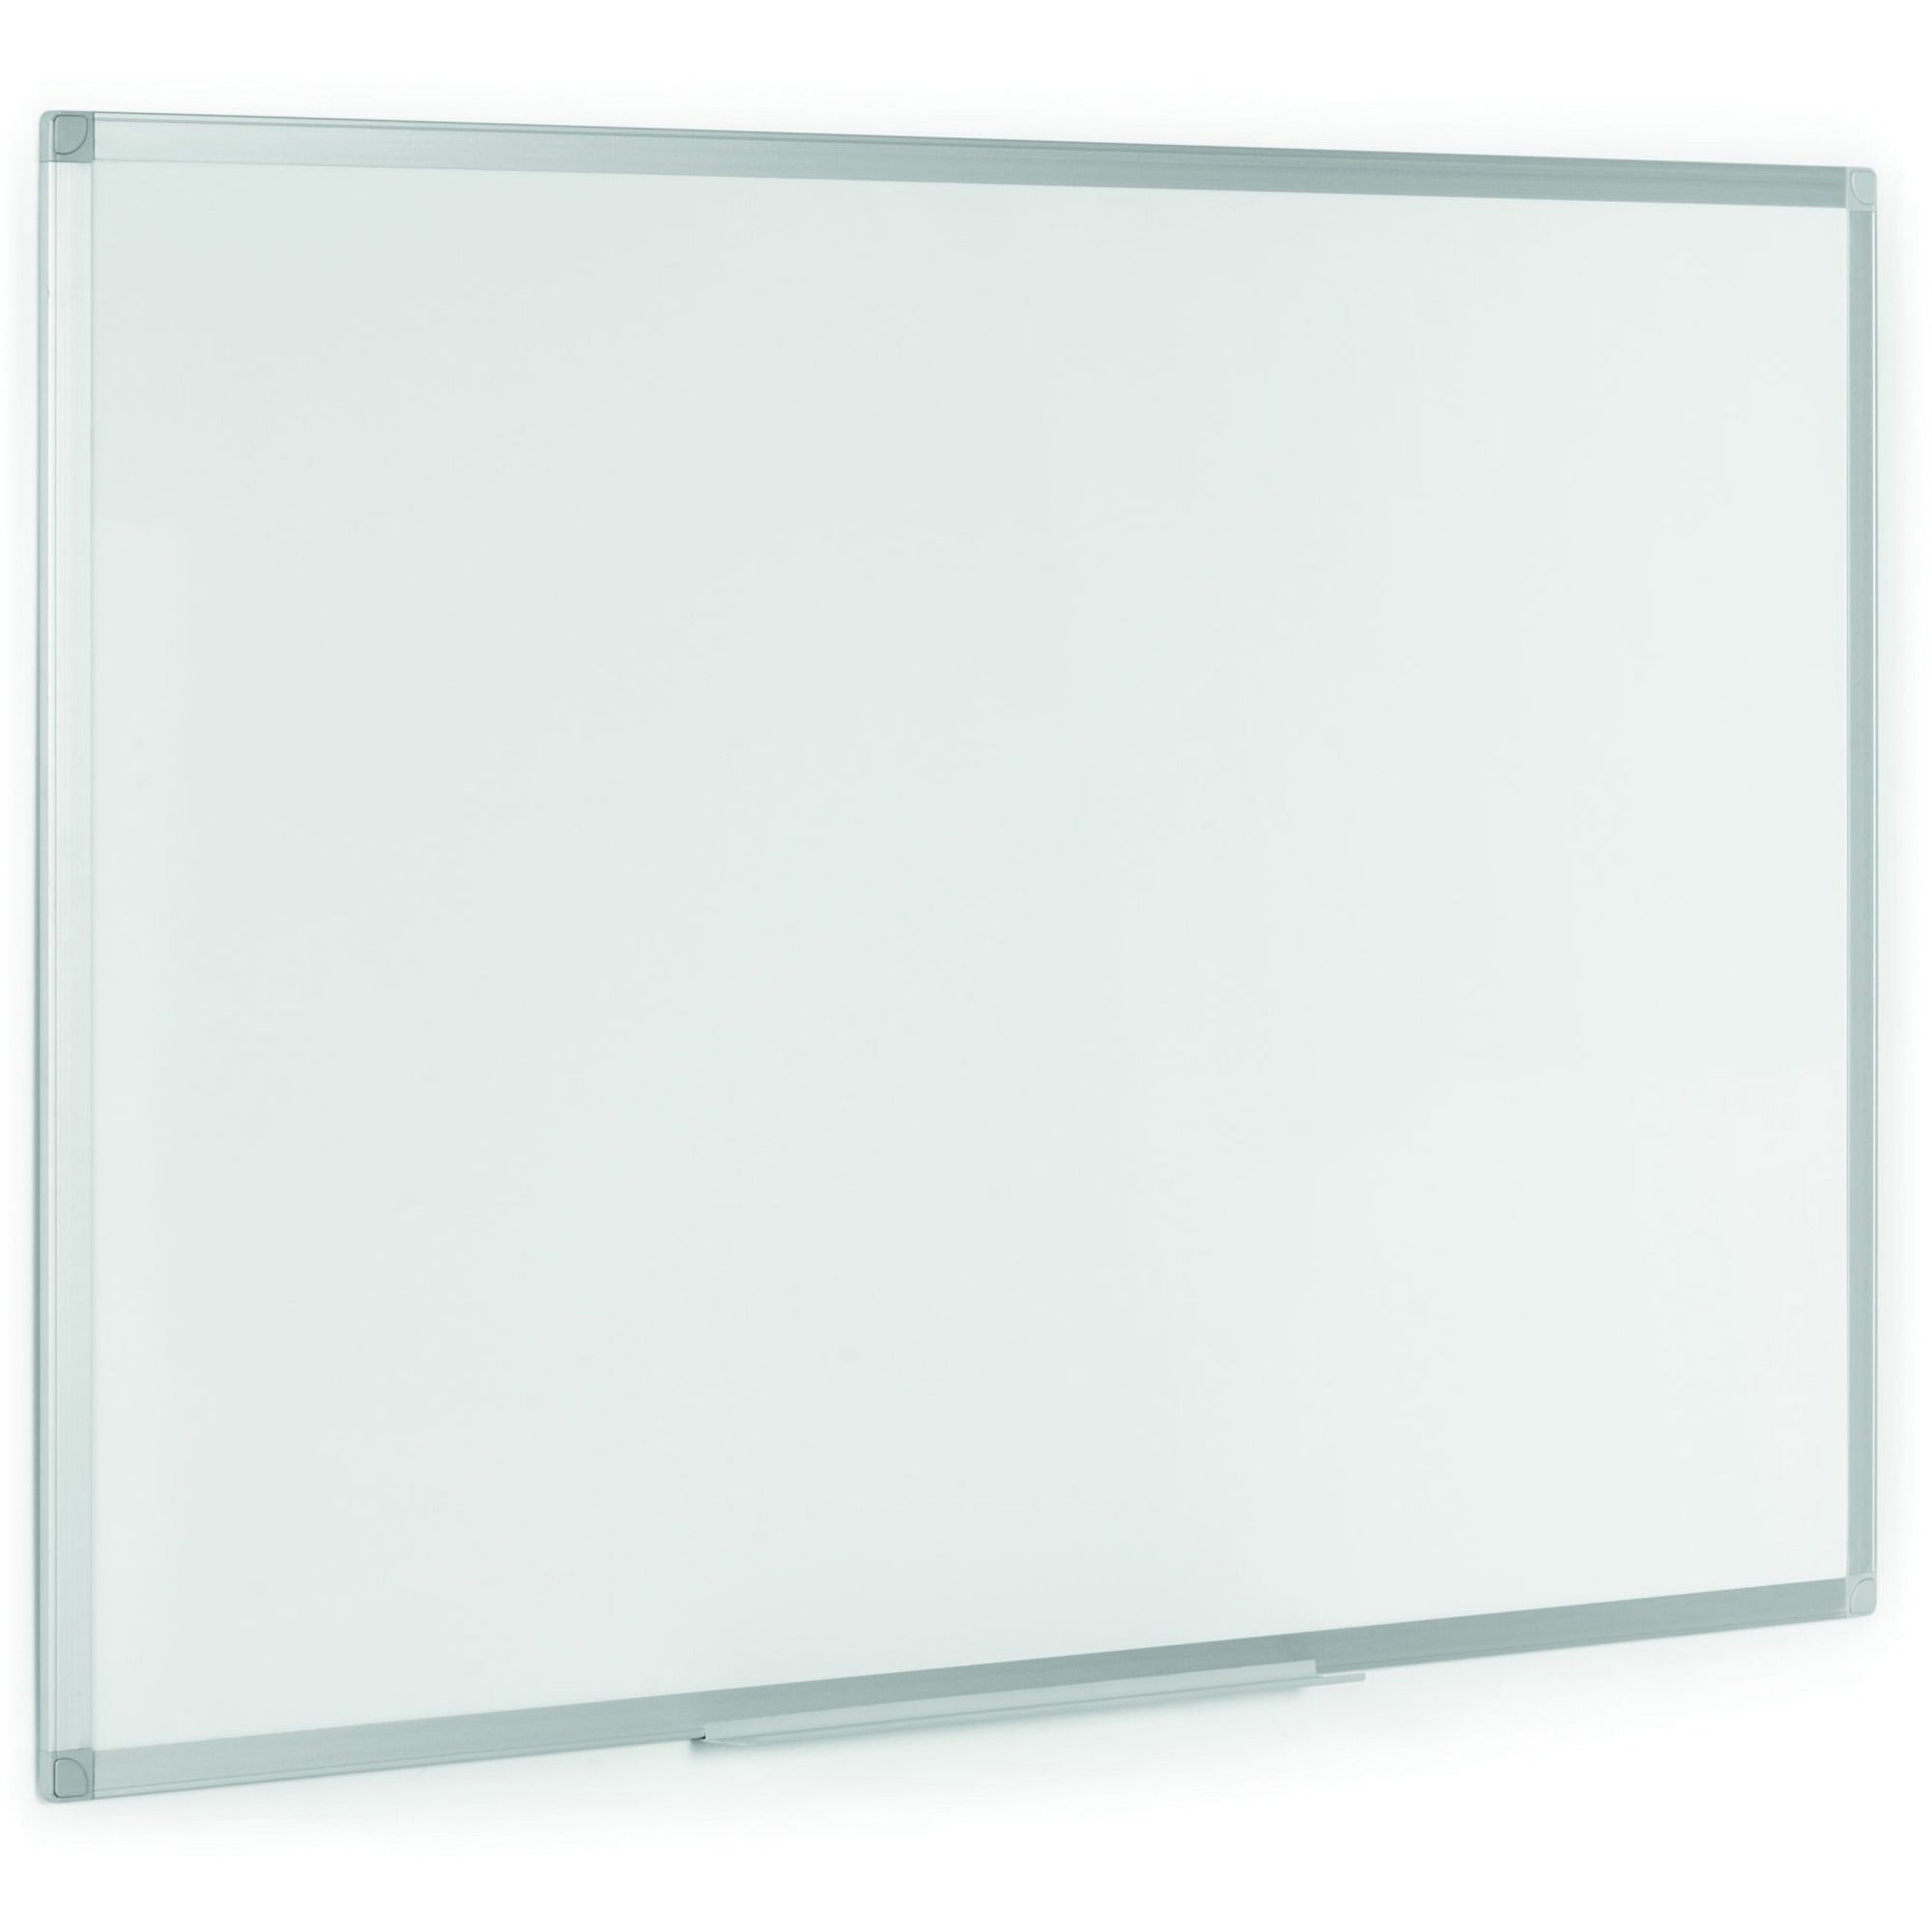 bi-silque-ayda-porcelain-dry-erase-board-48-4-ft-width-x-36-3-ft-height-white-porcelain-surface-aluminum-frame-rectangle-horizontal-vertical-magnetic-1-each_bvccr08999214 - 4